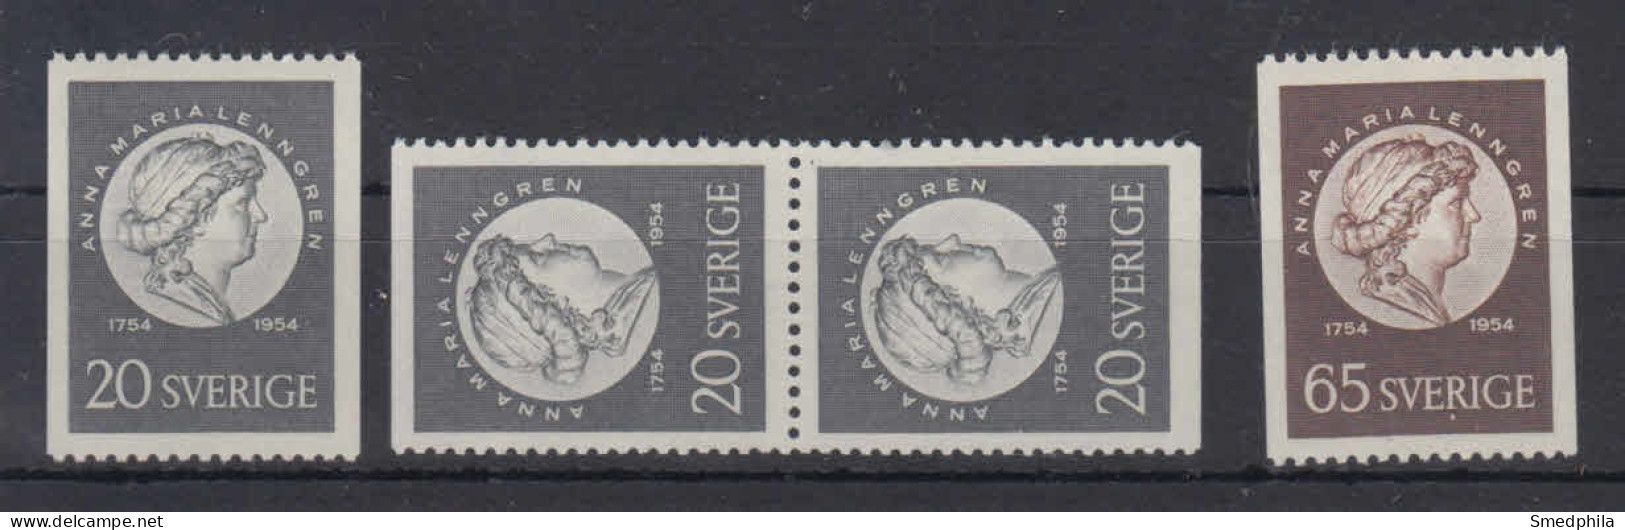 Sweden 1954 - Michel 394-395 MNH ** - Nuovi